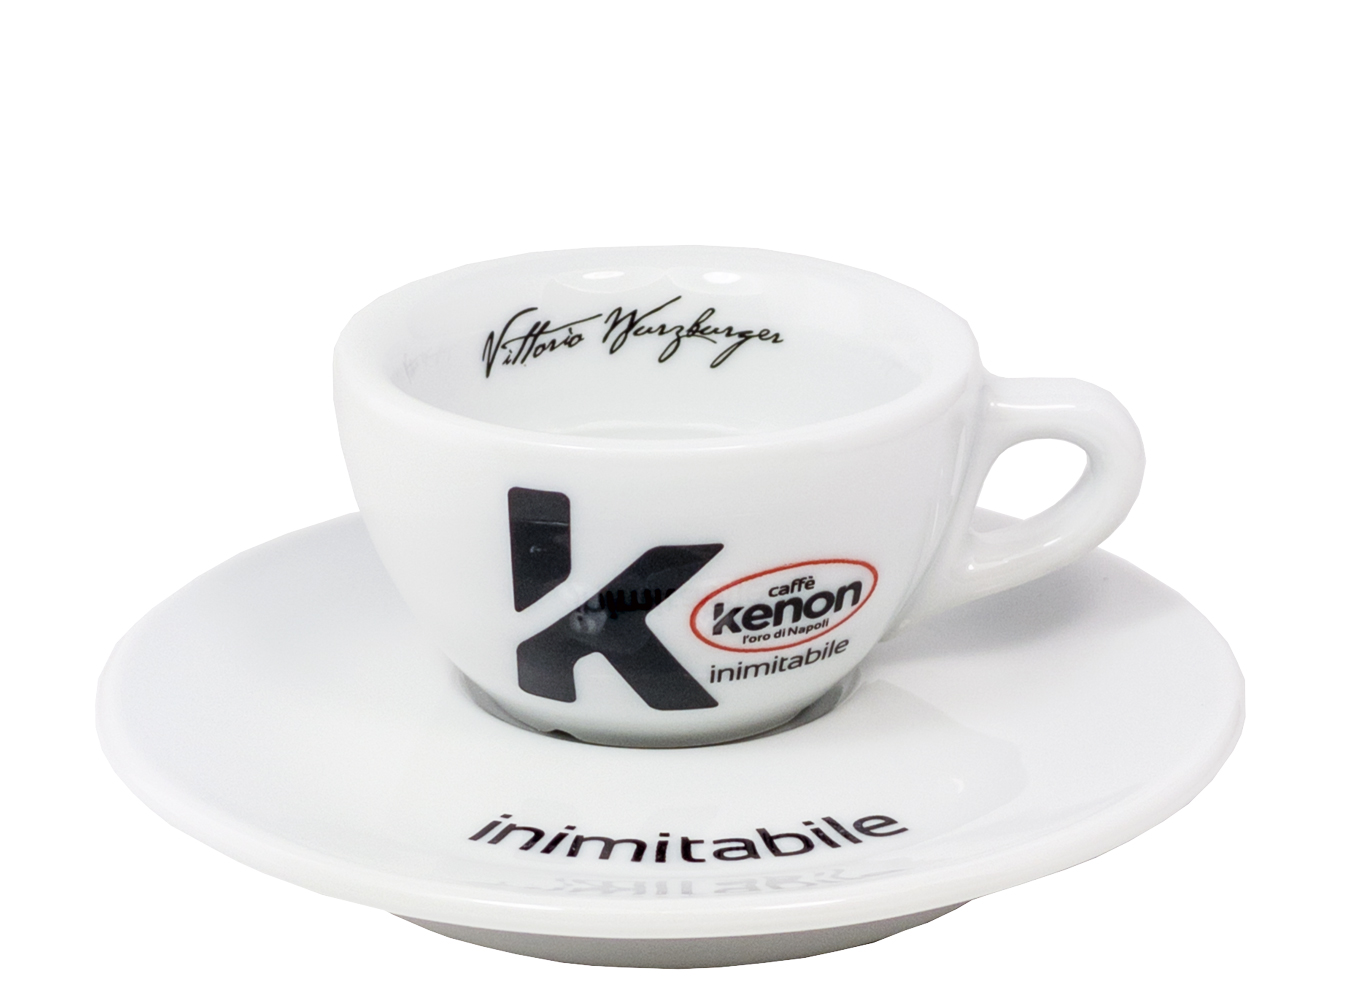 https://www.espresso-international.com/media/image/9e/6b/25/Kenon-Espressotasse-flach.jpg